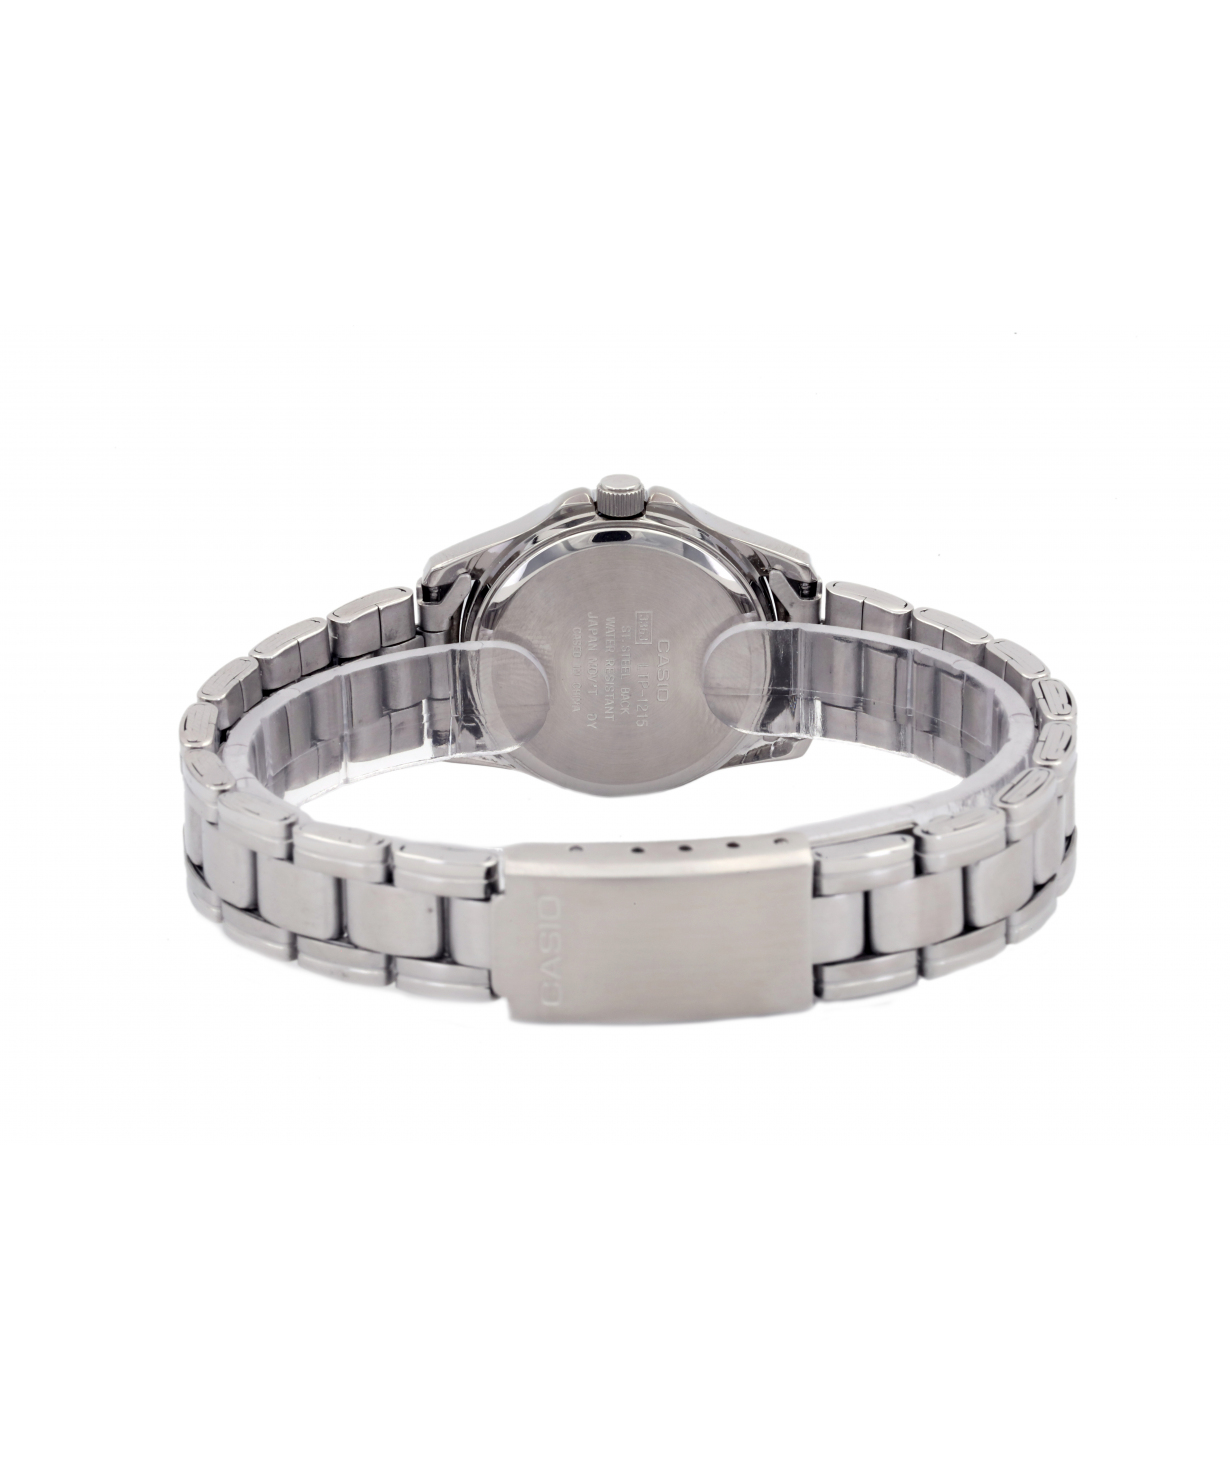 Wristwatch `Casio` LTP-1215A-7B2DF